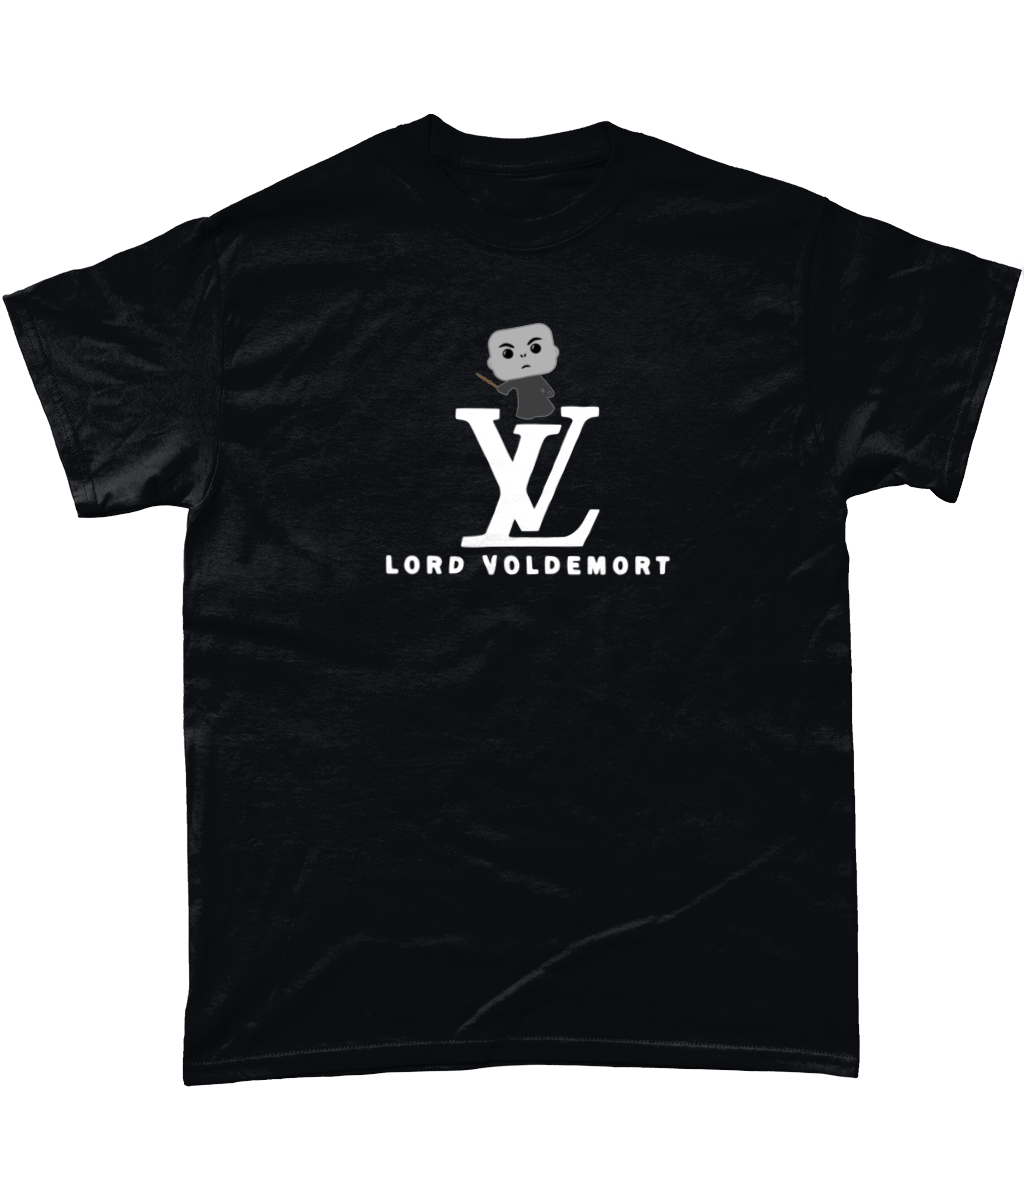 long live virgil shirt